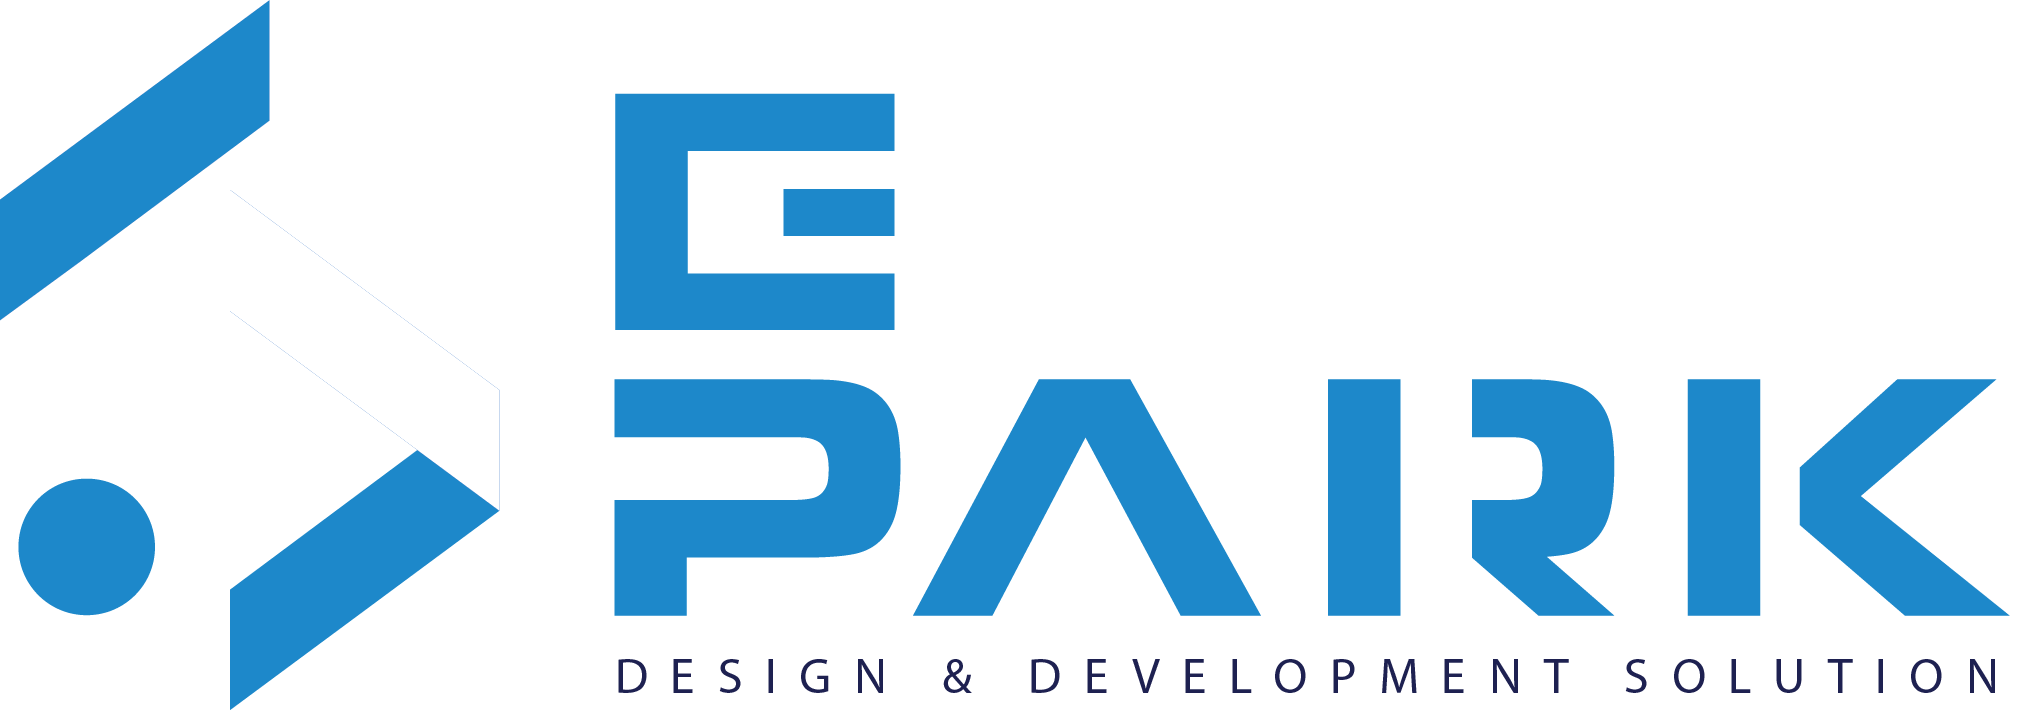 eDevPark logo